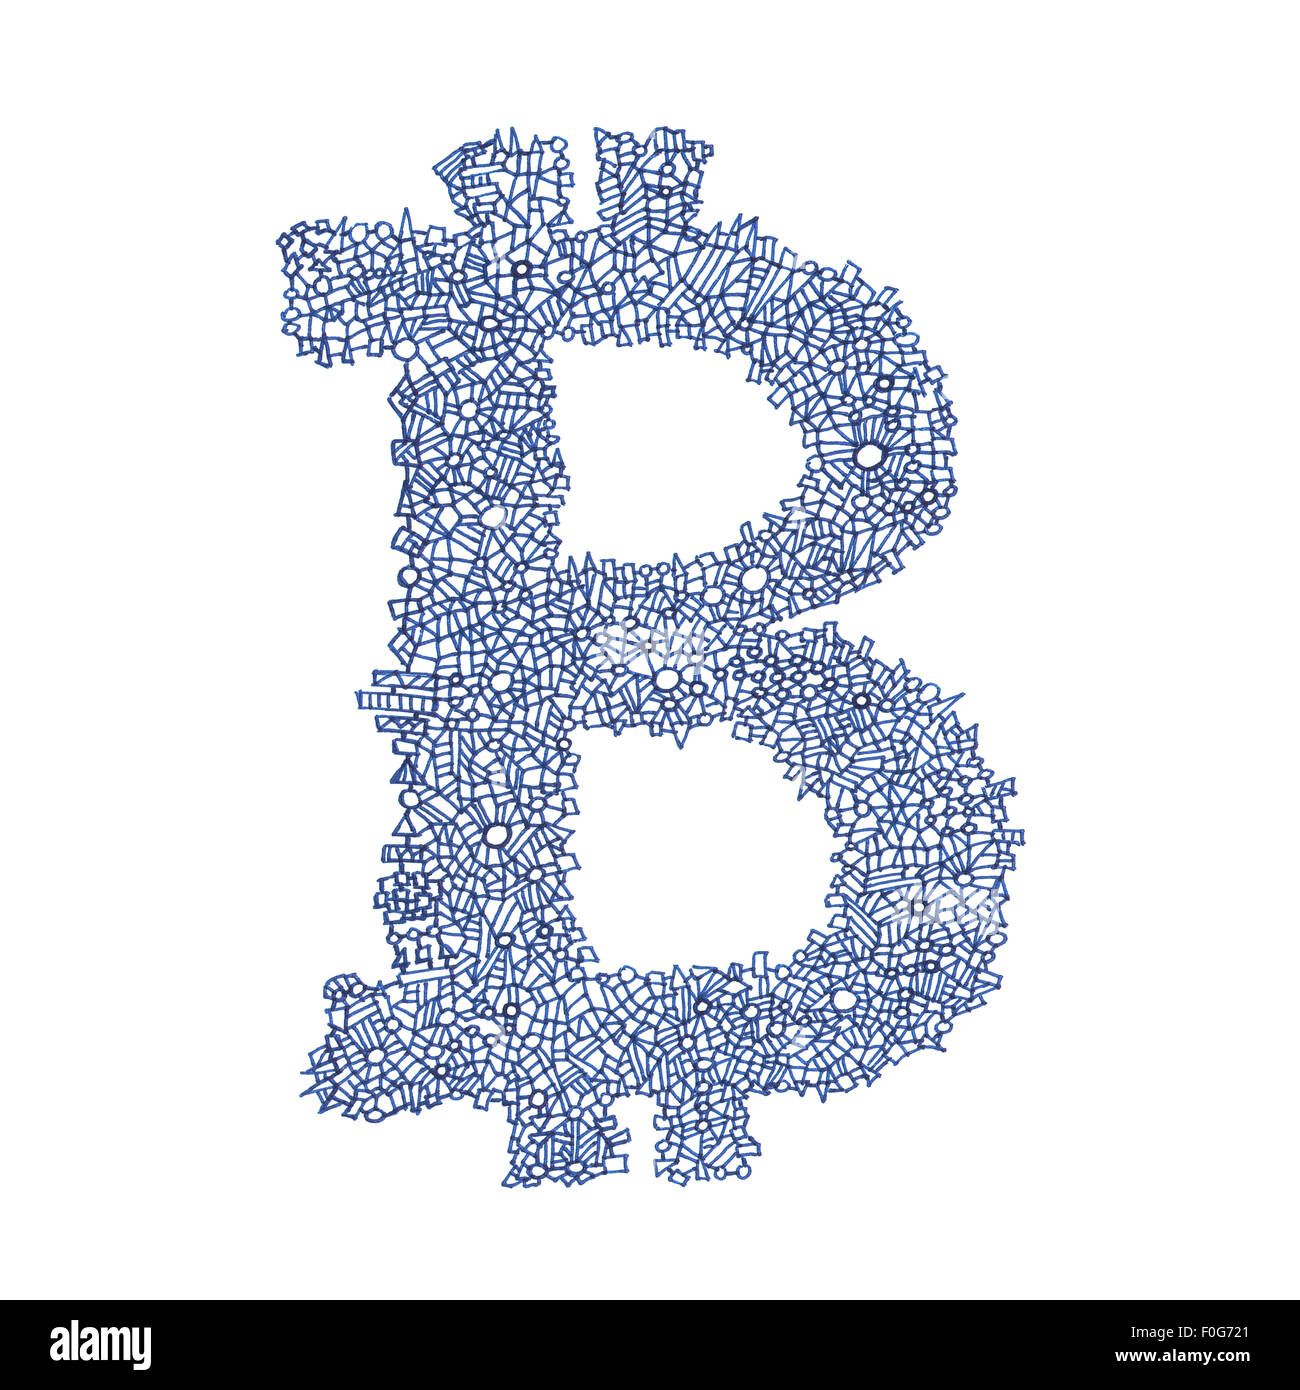 Bitcoin hand-drawn symbol of a digital decentralized crypto currency B&w Companion 5th Wheel Hitch Ram Puck